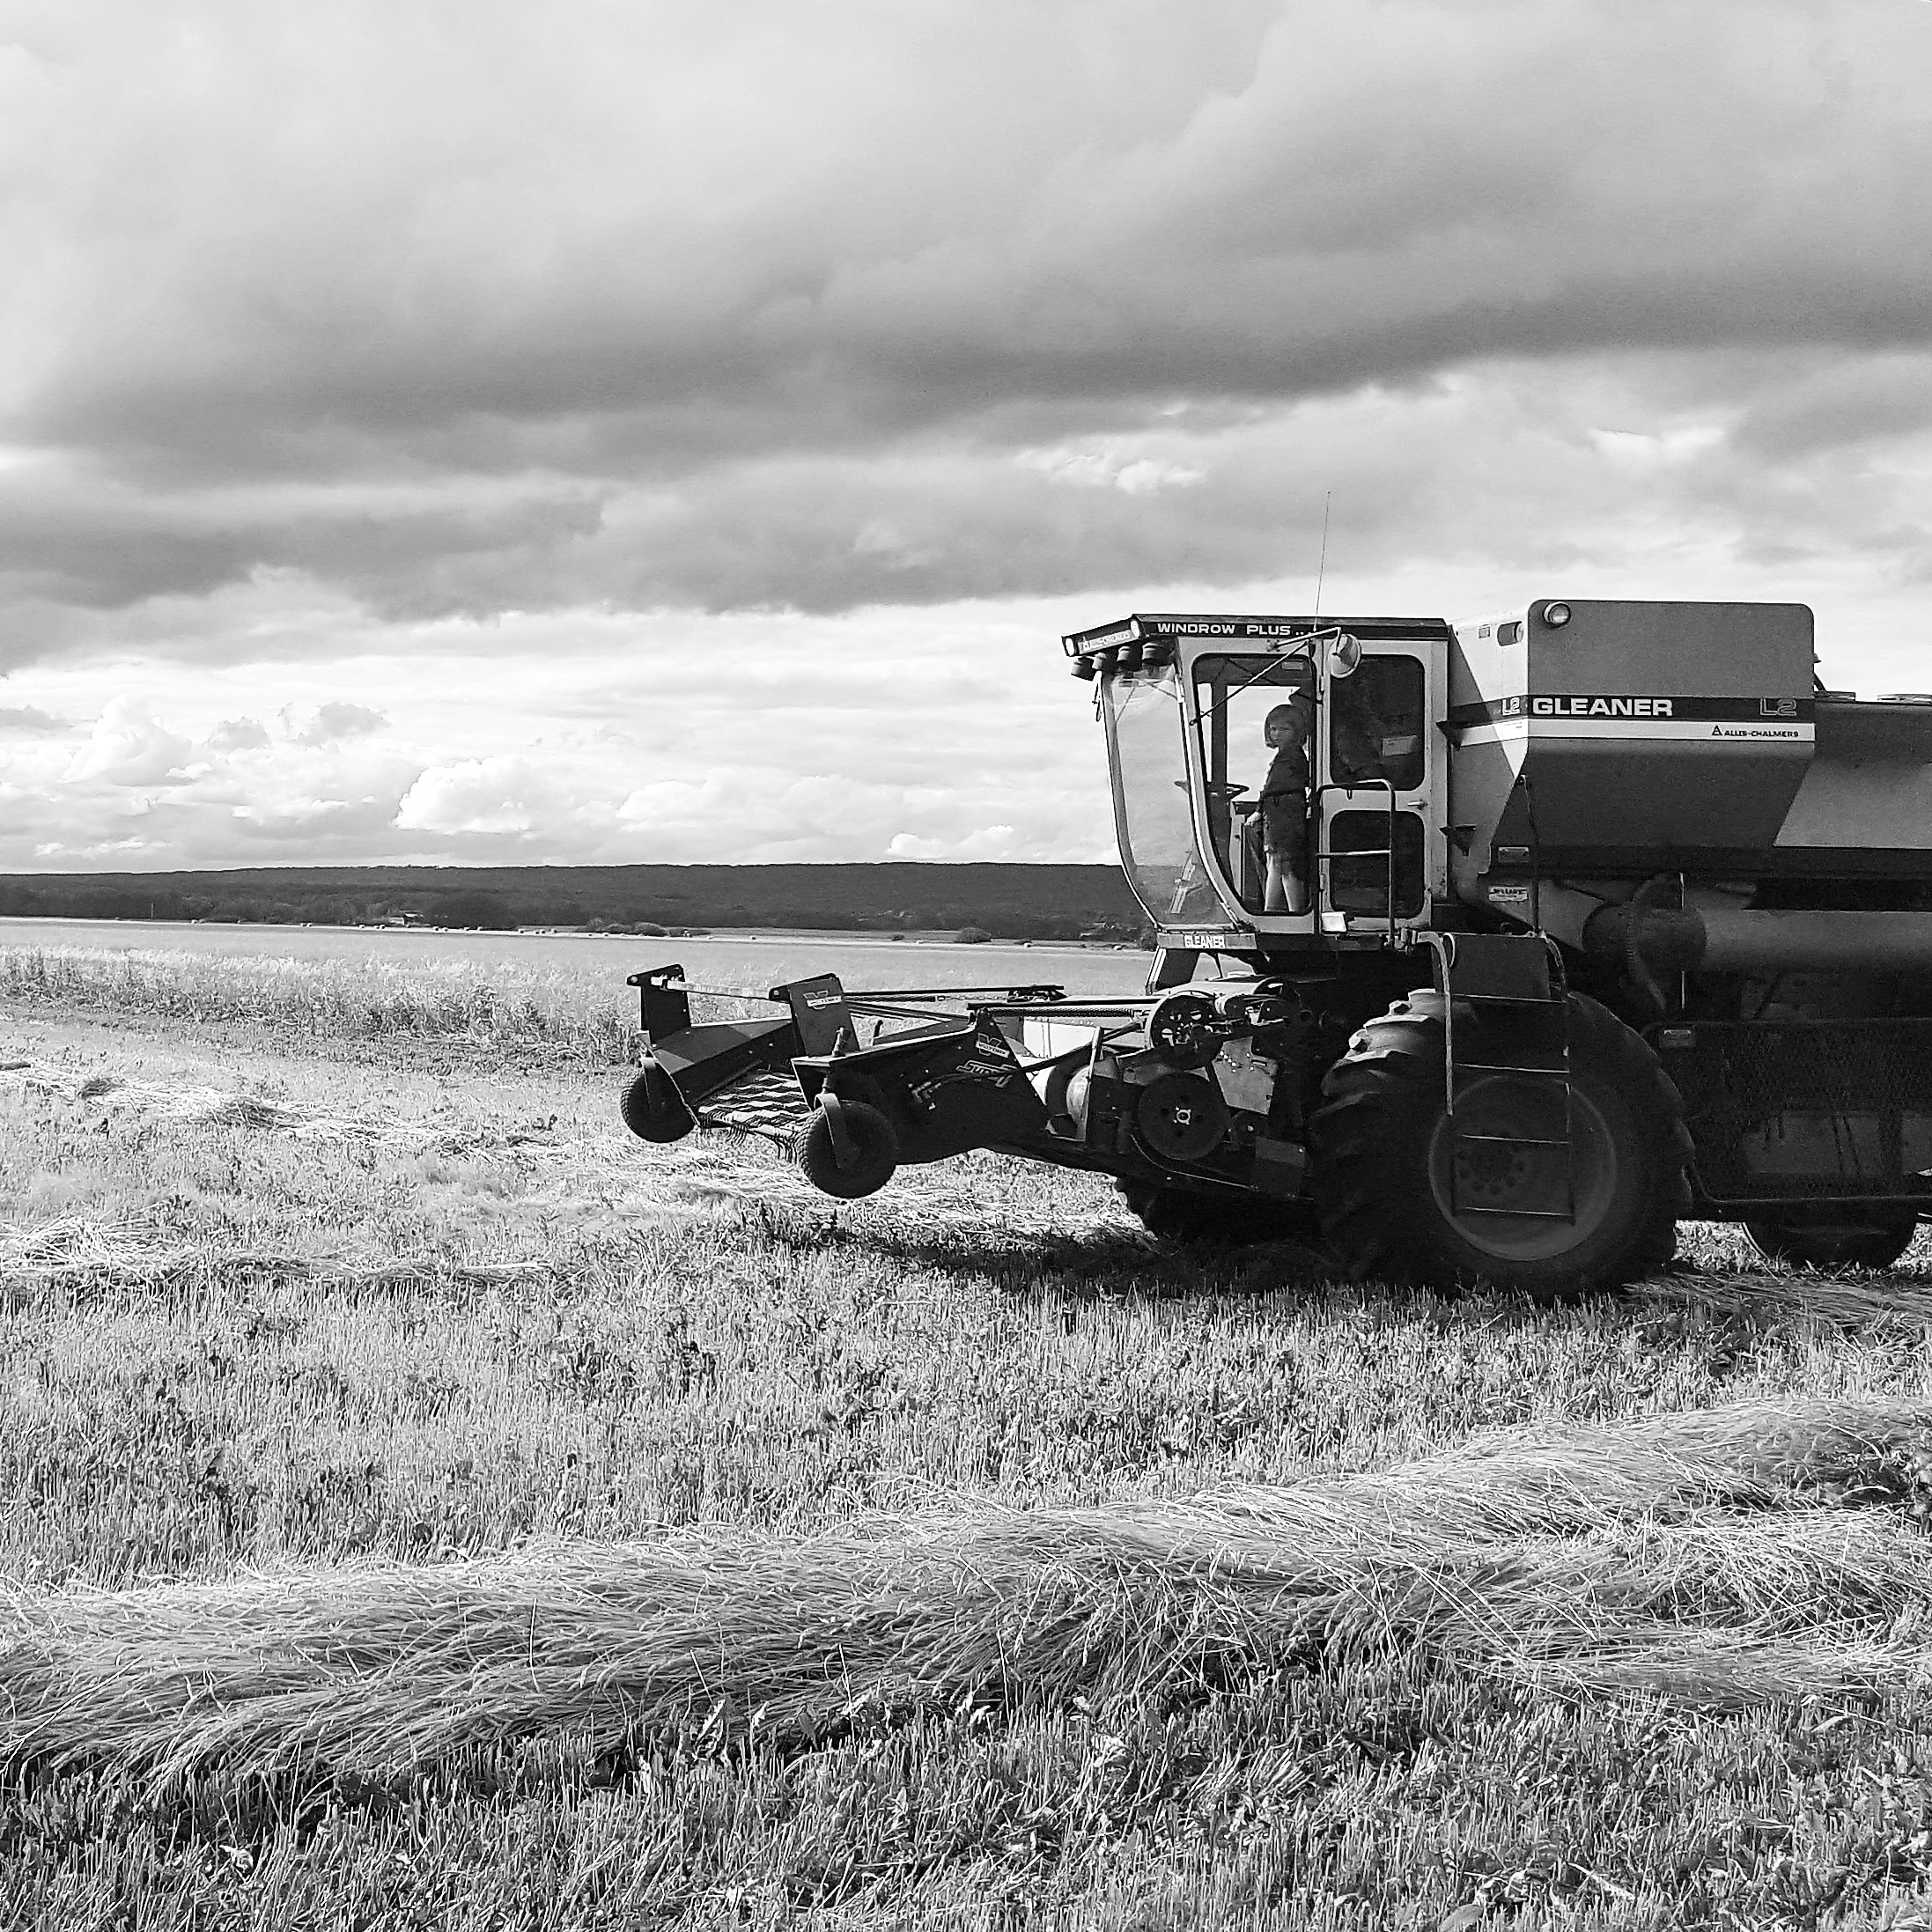 gleaner l2 combine in field, black and white photo